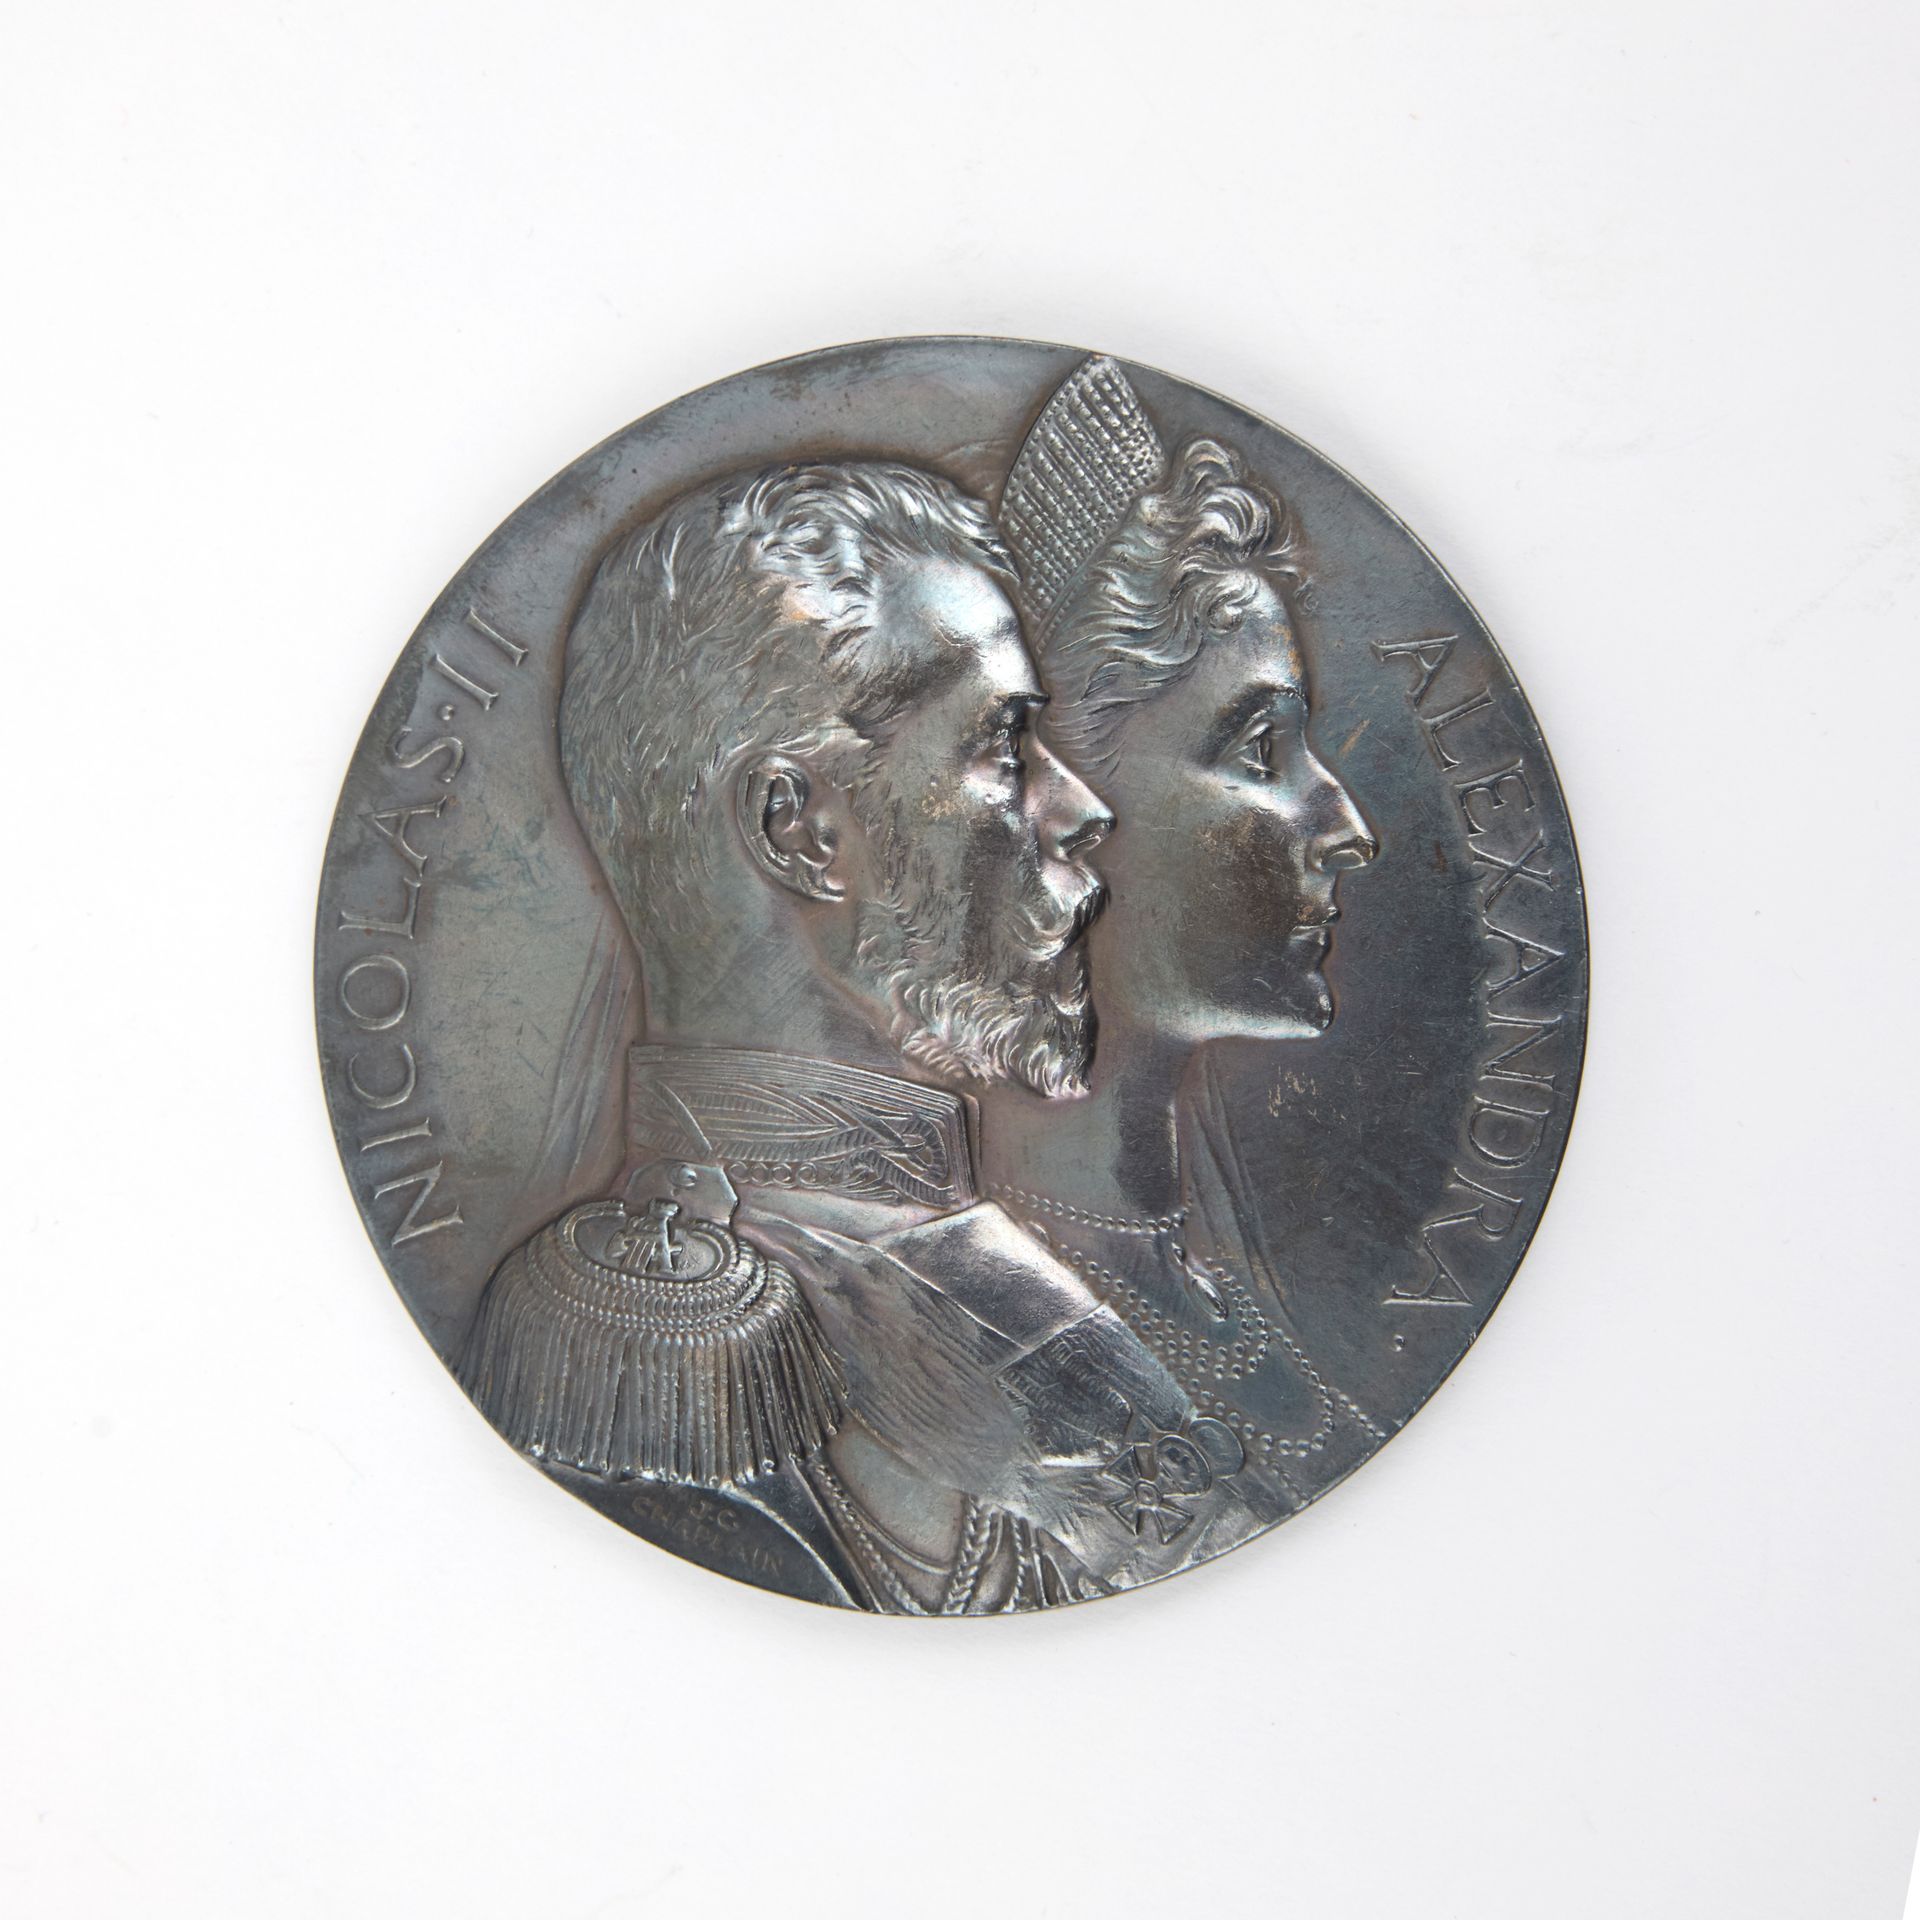 Null [ALLEANZA FRANCO-RUSSA]
Rara medaglia d'argento incisa da Jules Clément Cha&hellip;